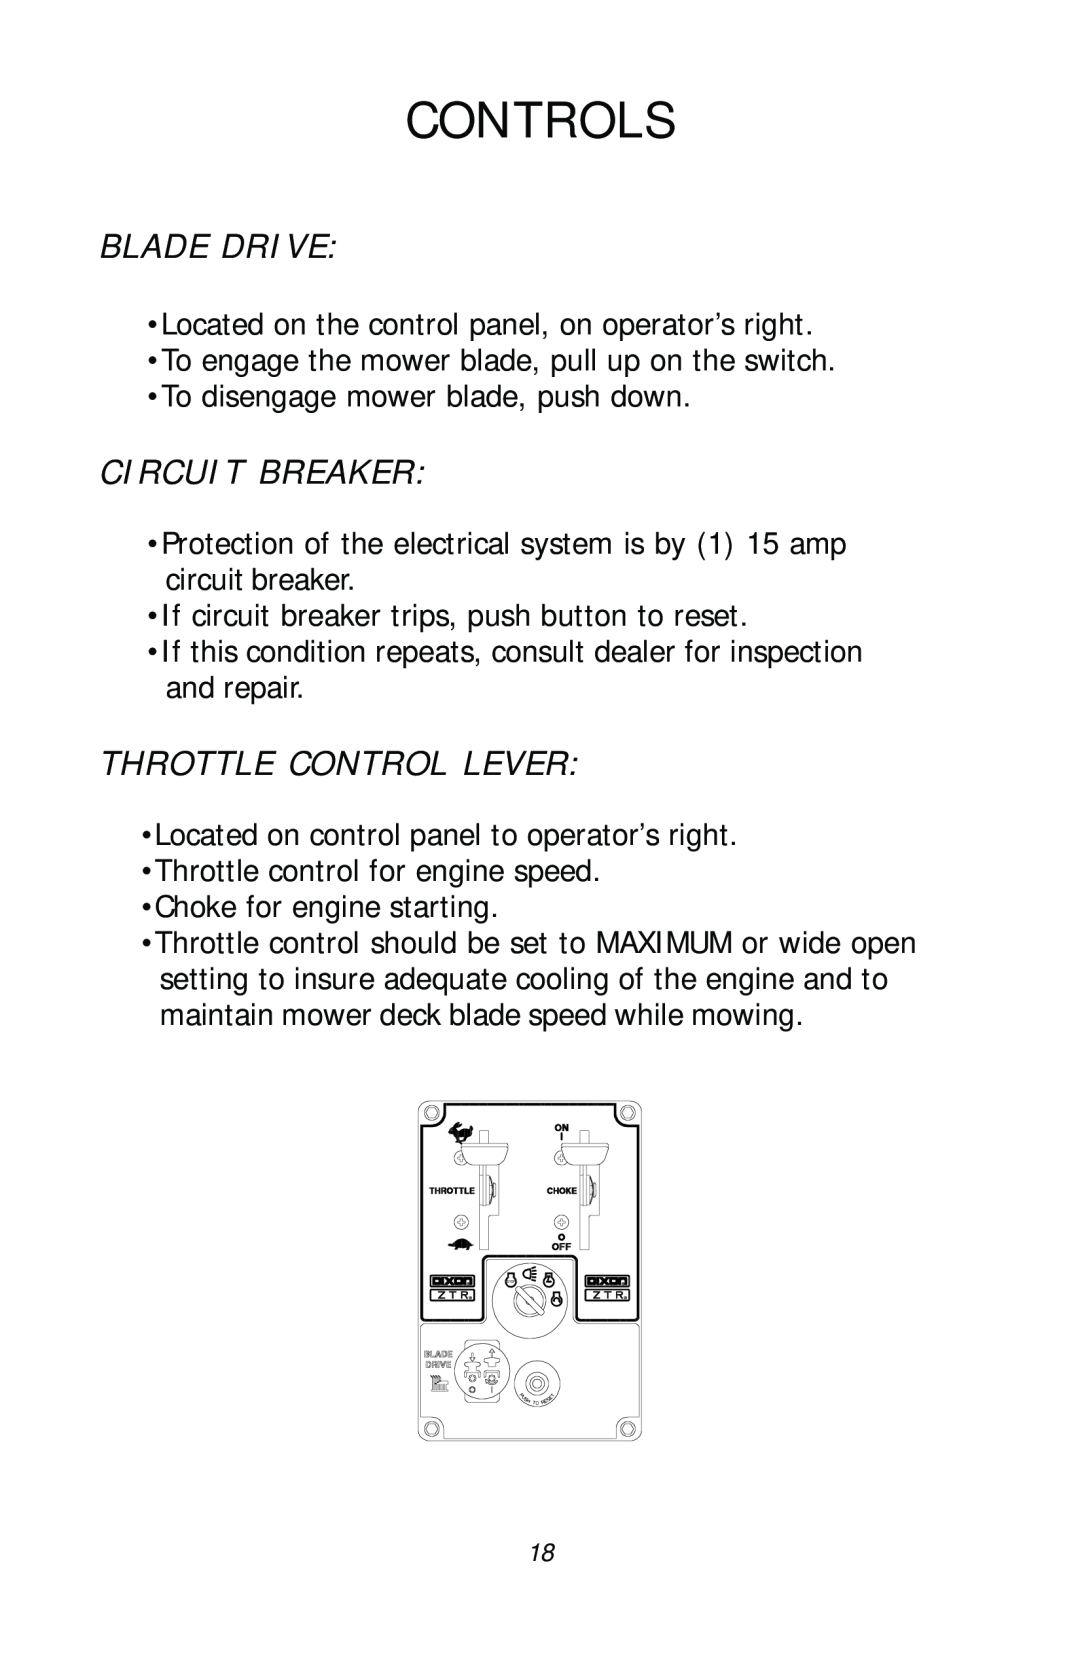 Dixon ZTR RAM 50, 17411-1103 manual Controls, Blade Drive, Circuit Breaker, Throttle Control Lever 